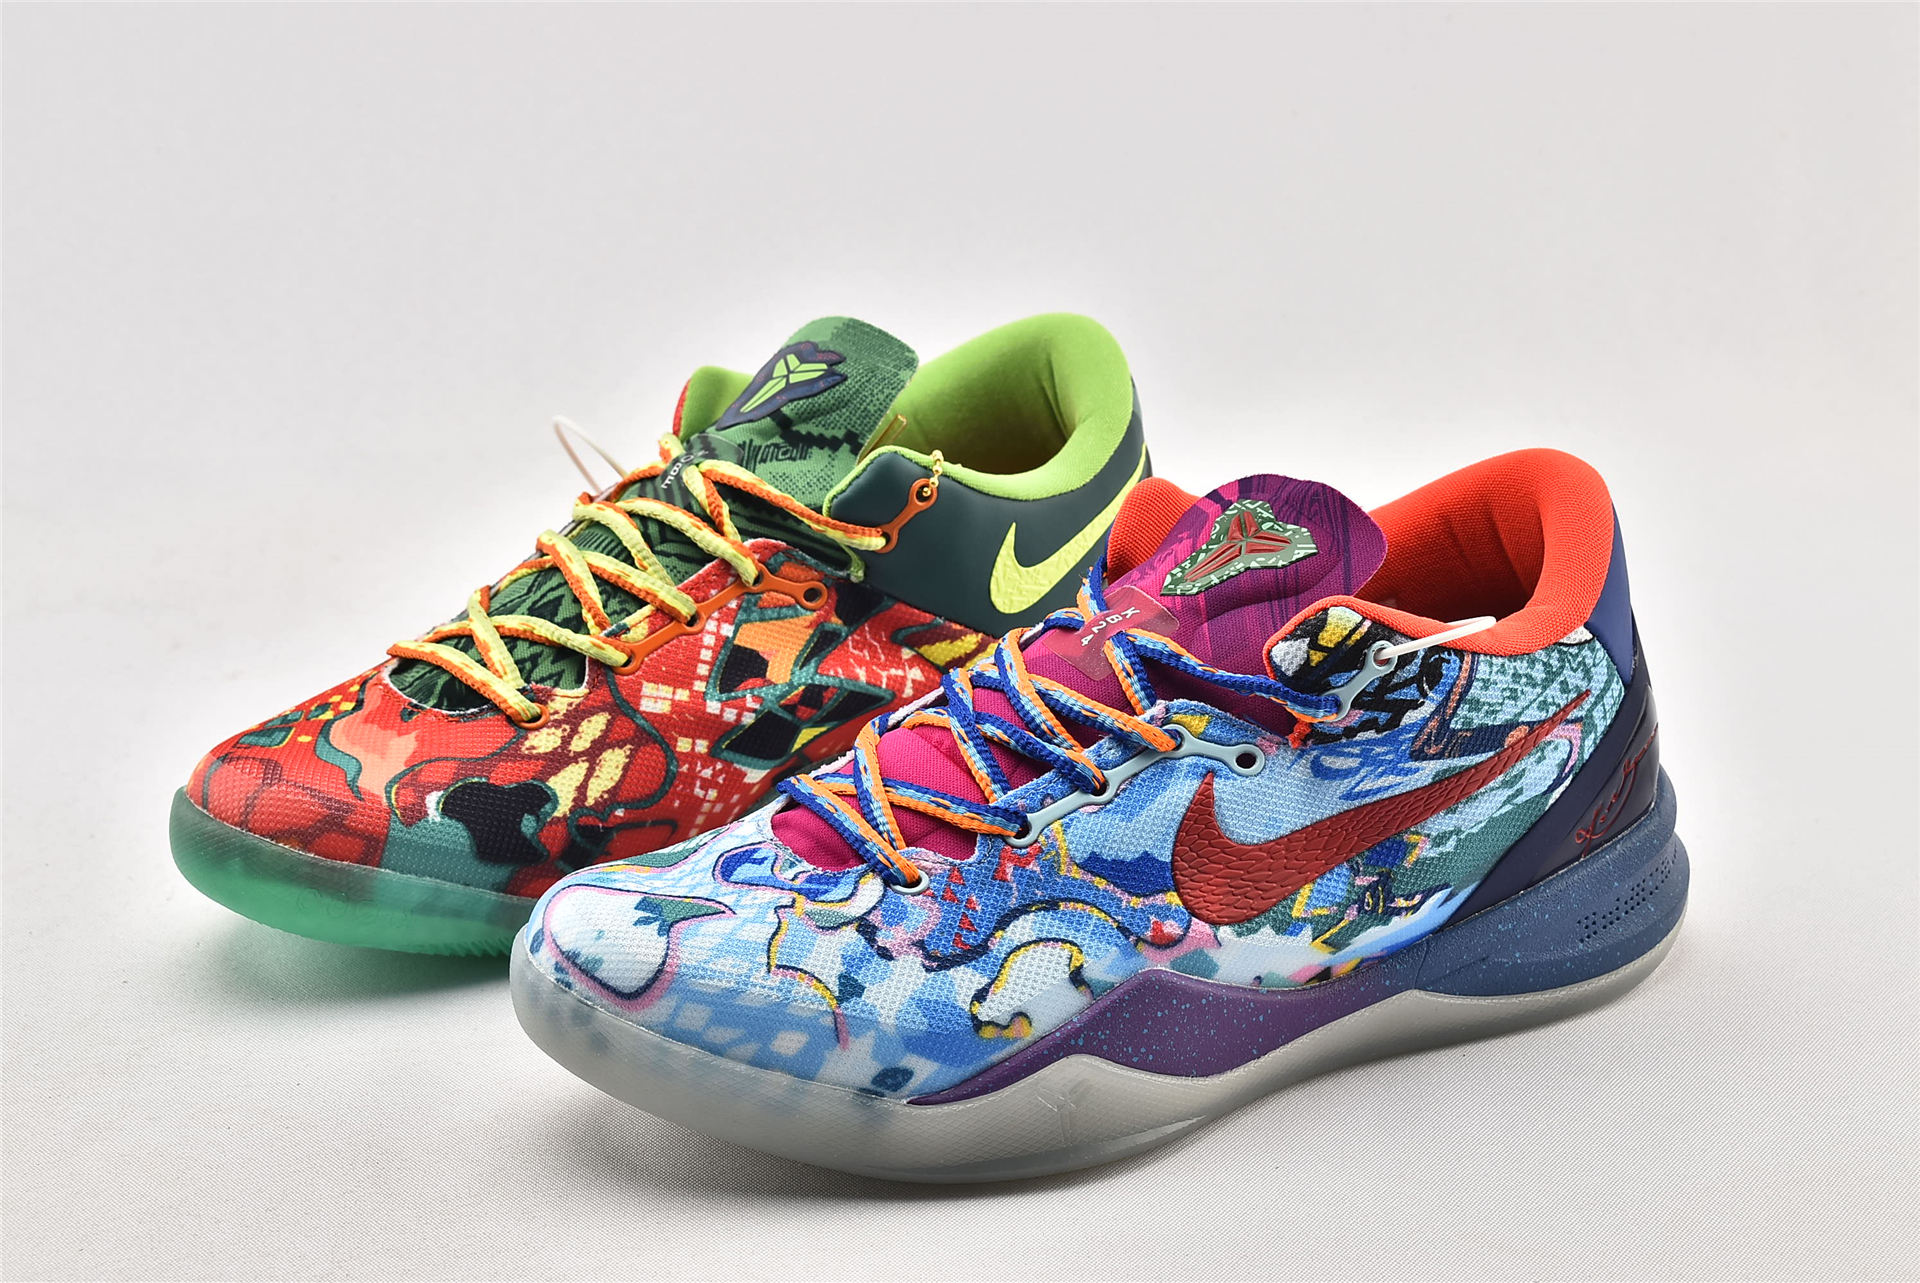 Nike Kobe 8 System Premium “What the 